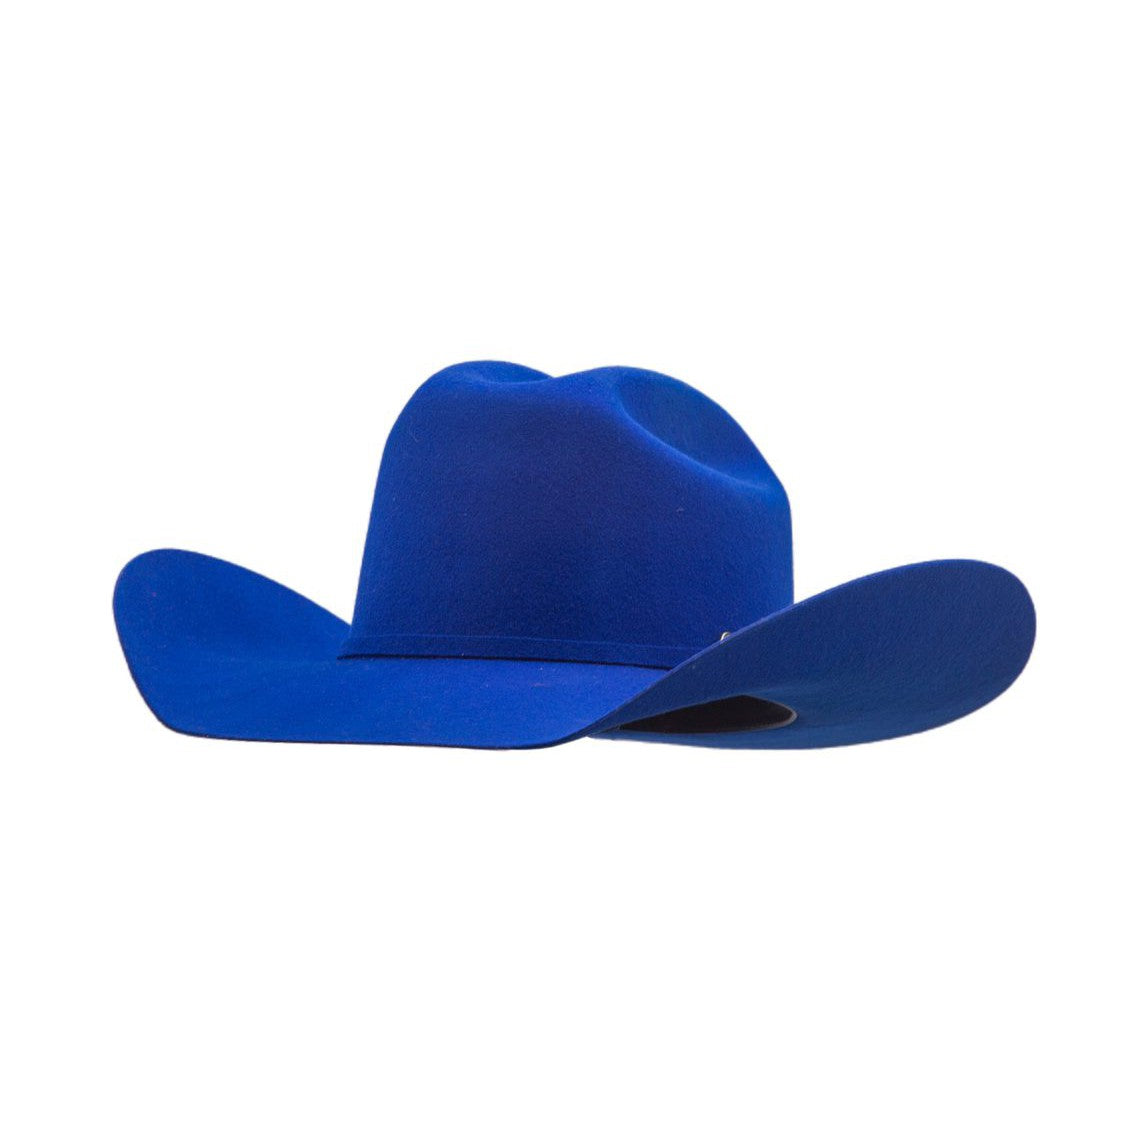 Prohat Wool Felt Precreased Western Hat - Texas Blue